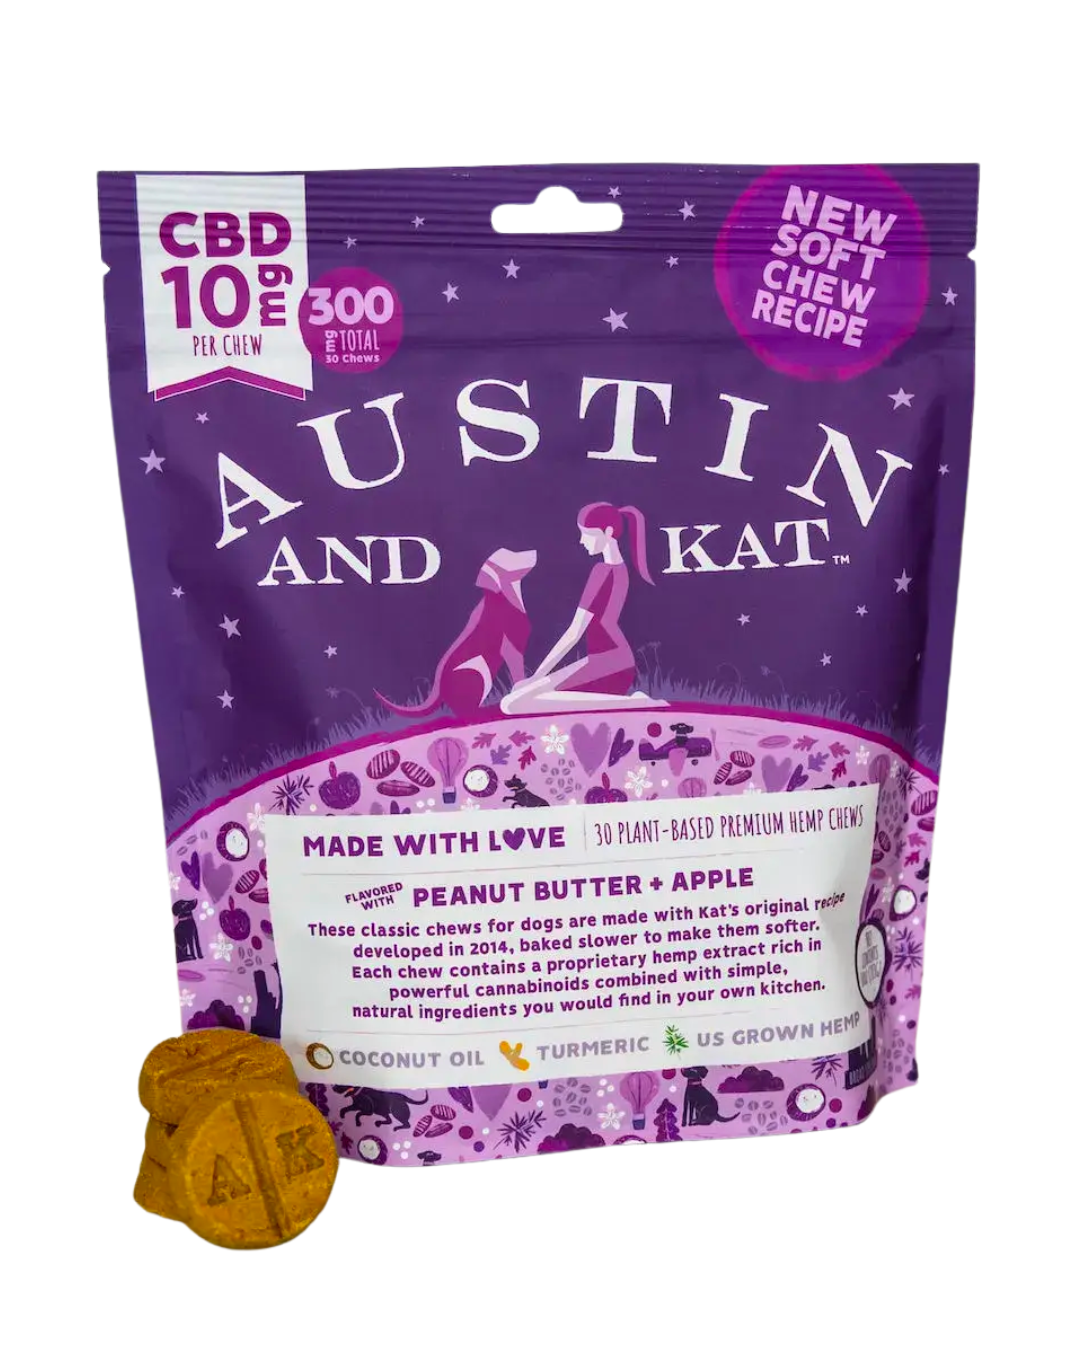 Austin & Kat - CBD chews